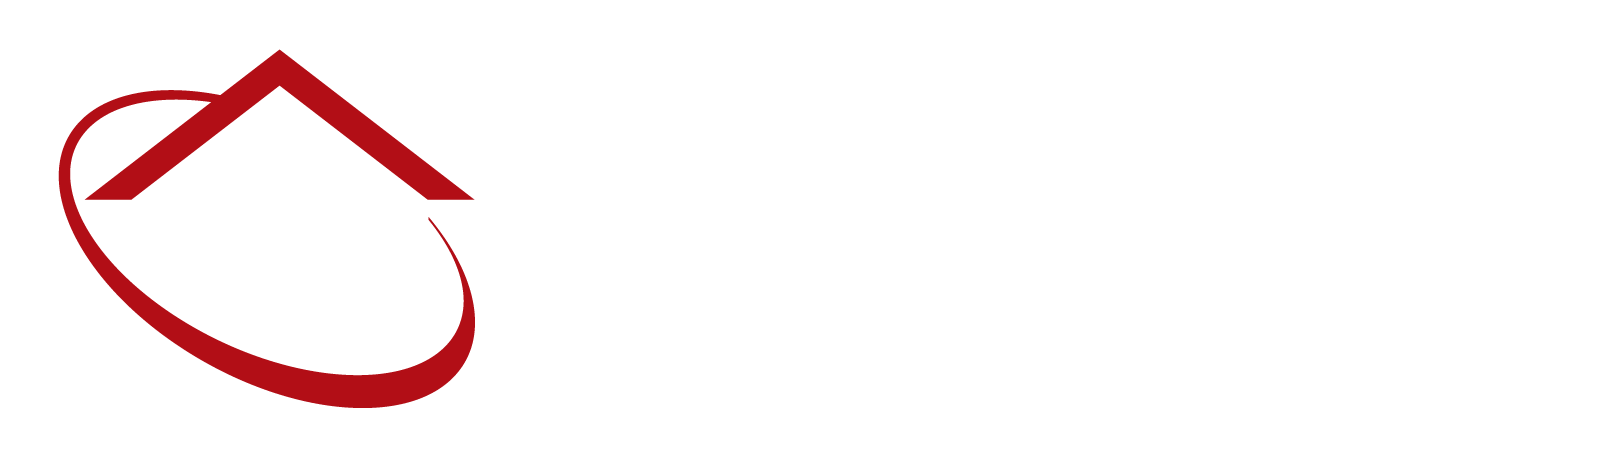 Nobre Lar Imóveis - CRECI: 035121-J